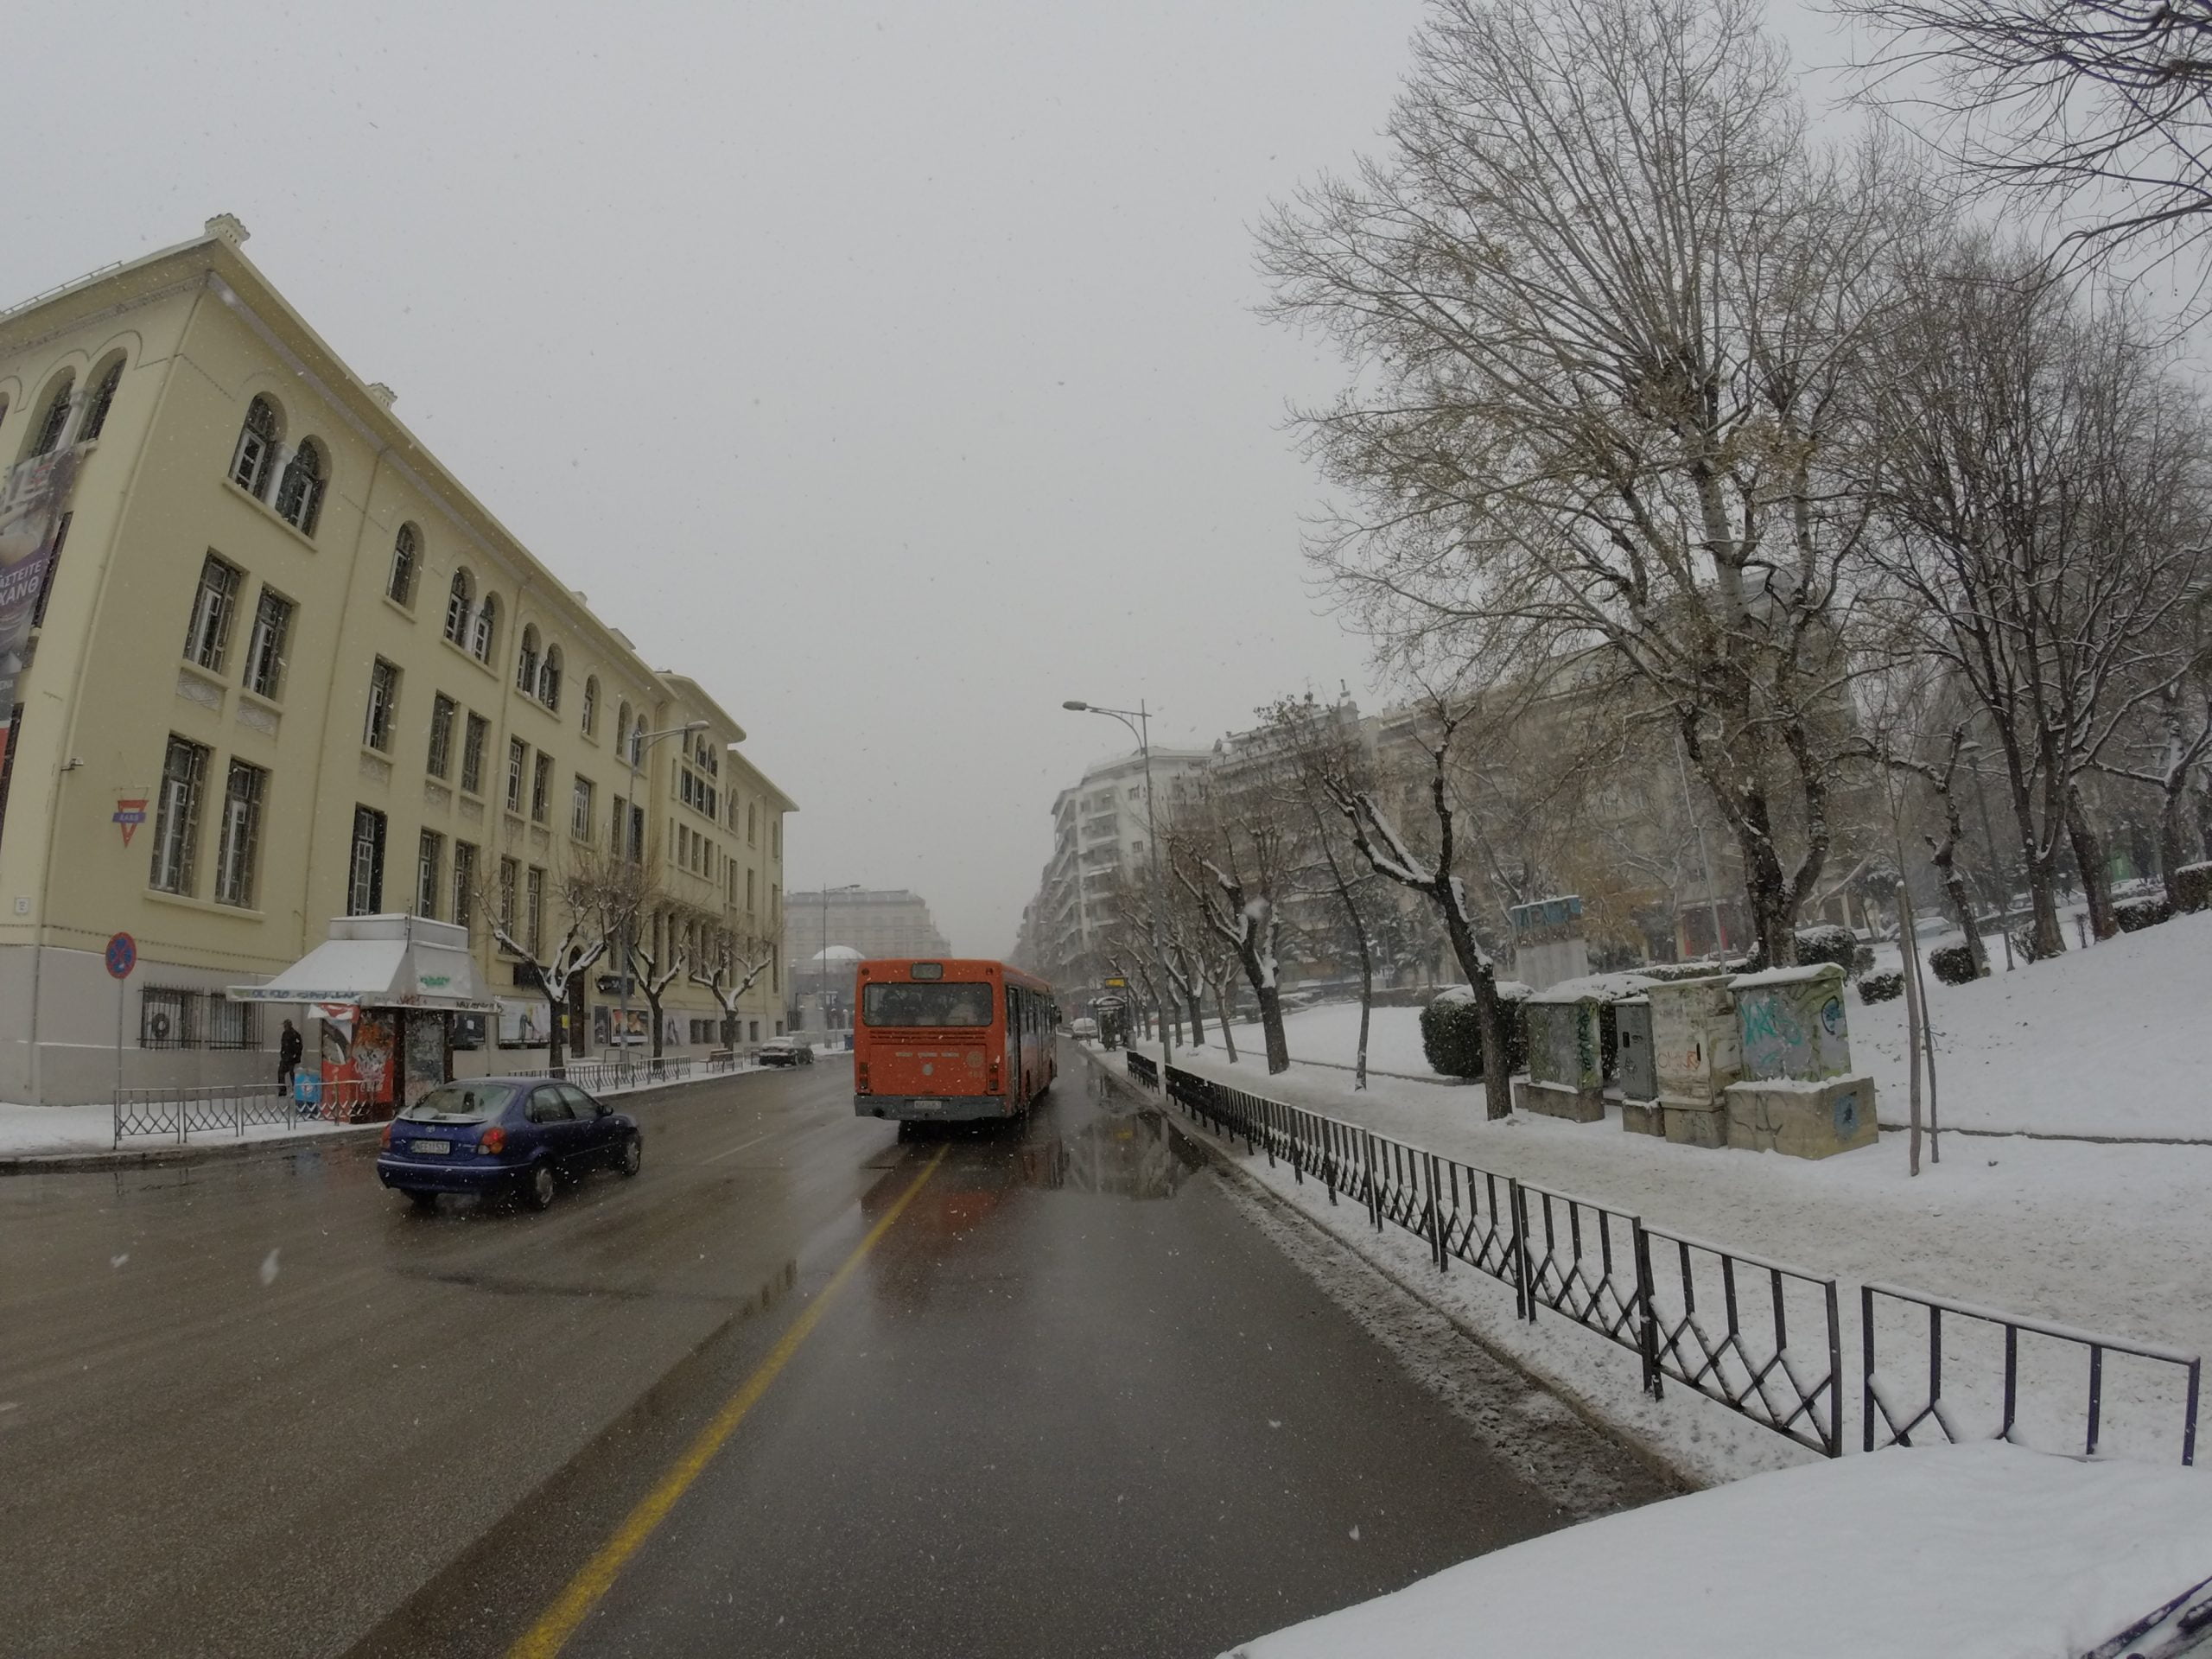 Aνοιχτοί οι κεντρικοί οδοί της Θεσσαλονίκης (ΦΩΤΟ)